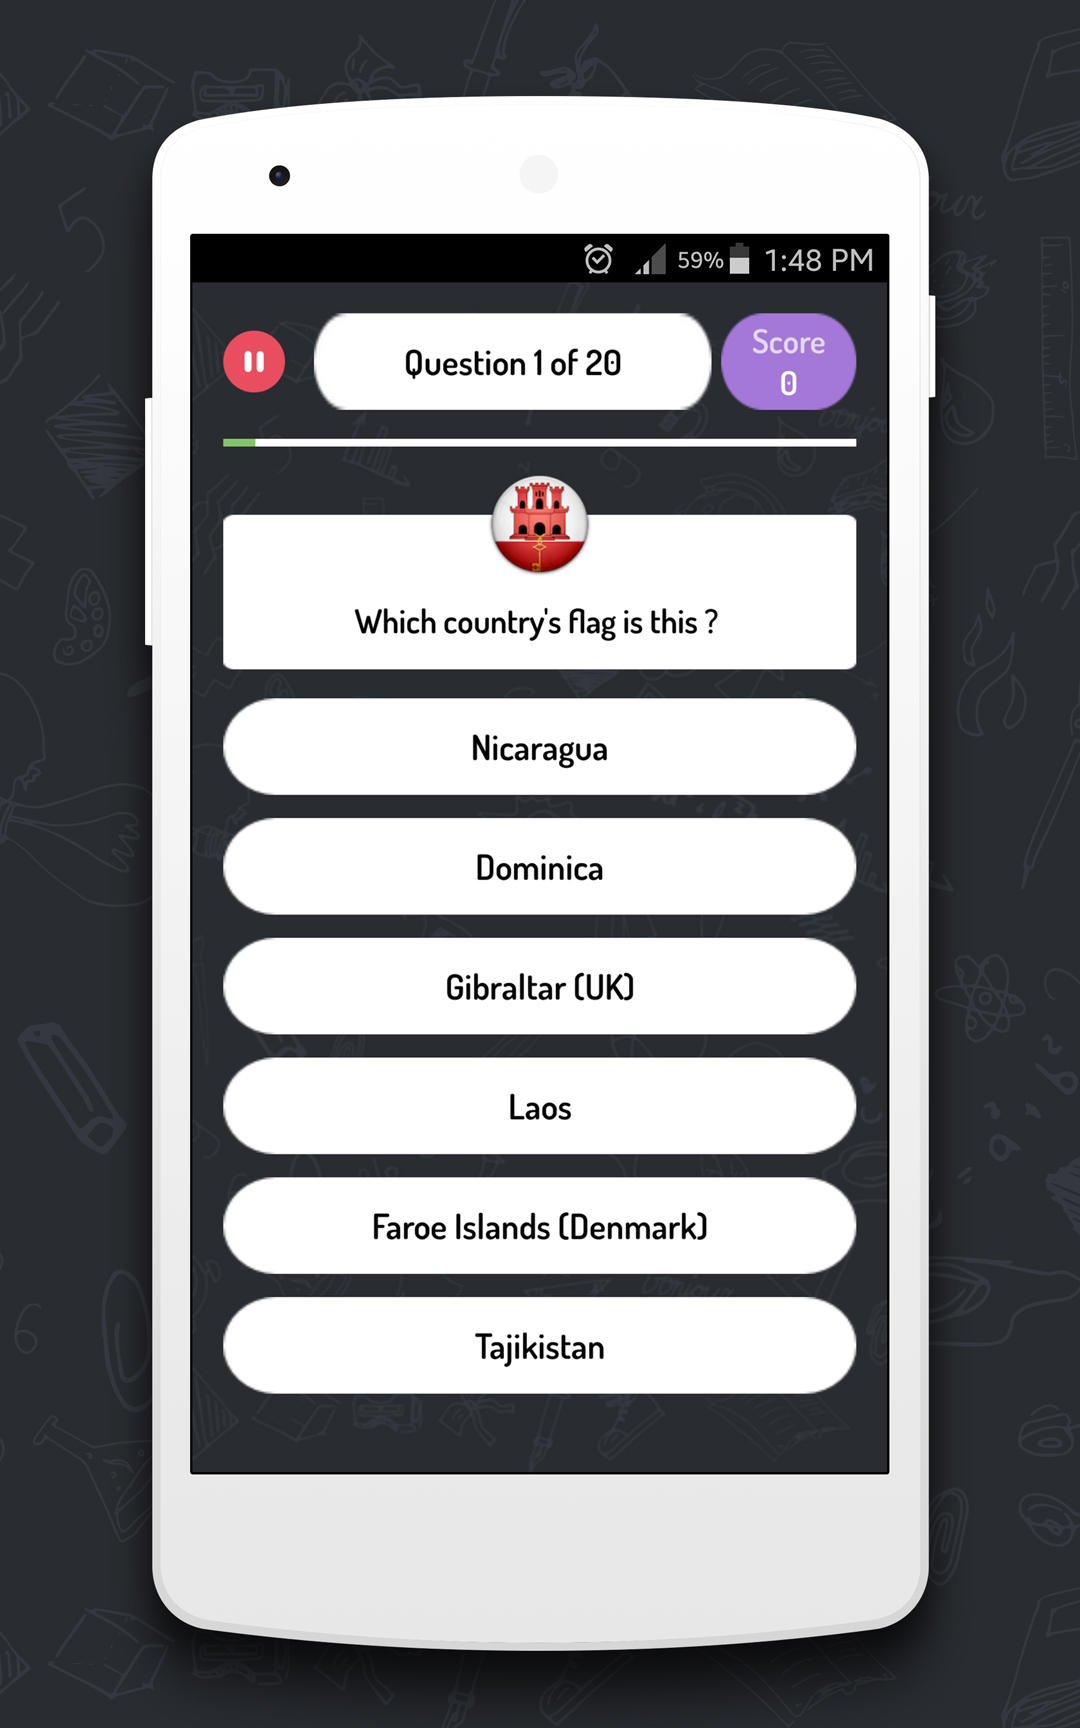 World Quiz screenshot game